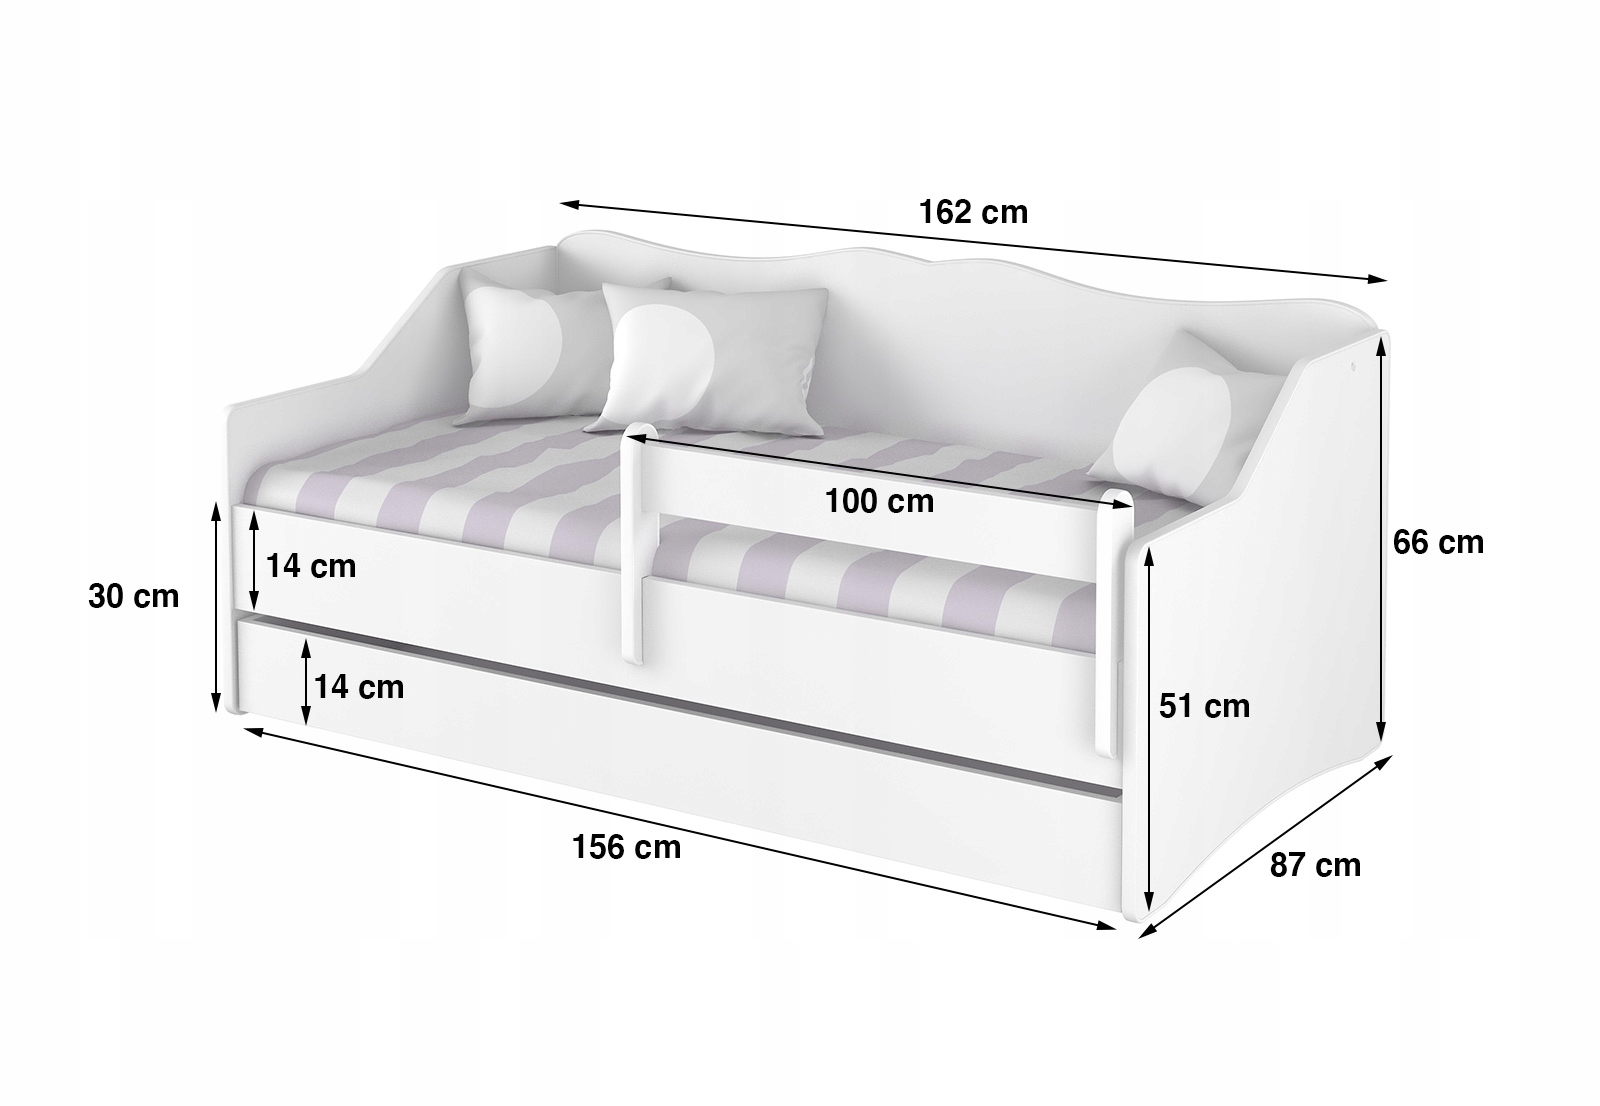 стандартные размеры матрасов для двухъярусных кроватей